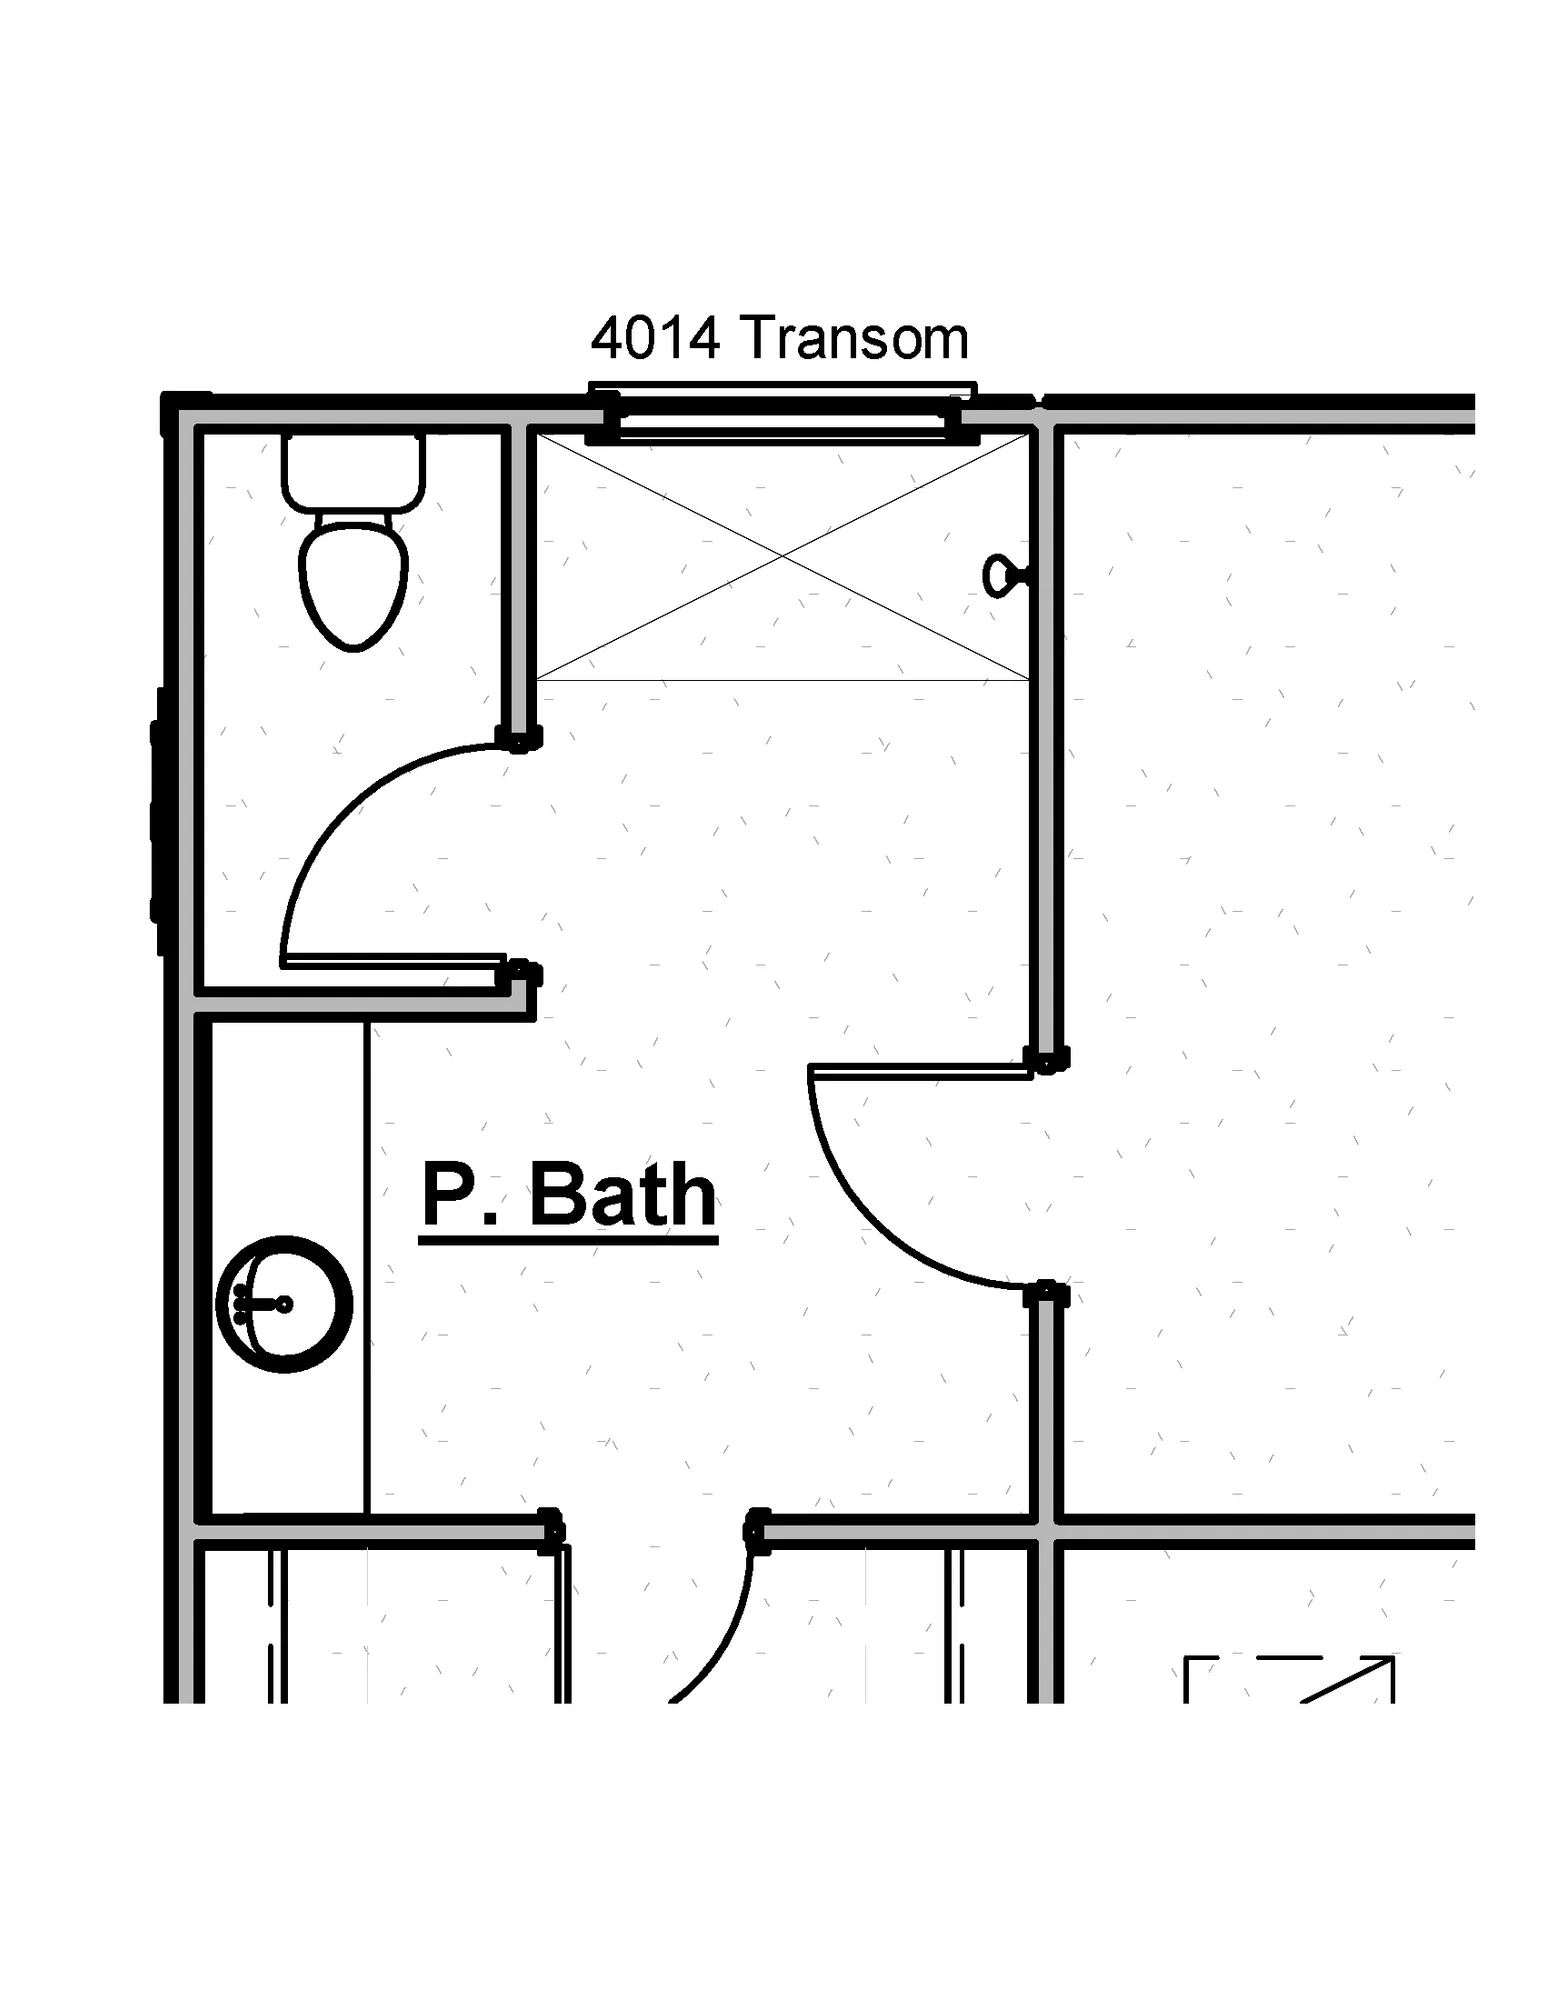 Primary Bath Transom Window - undefined